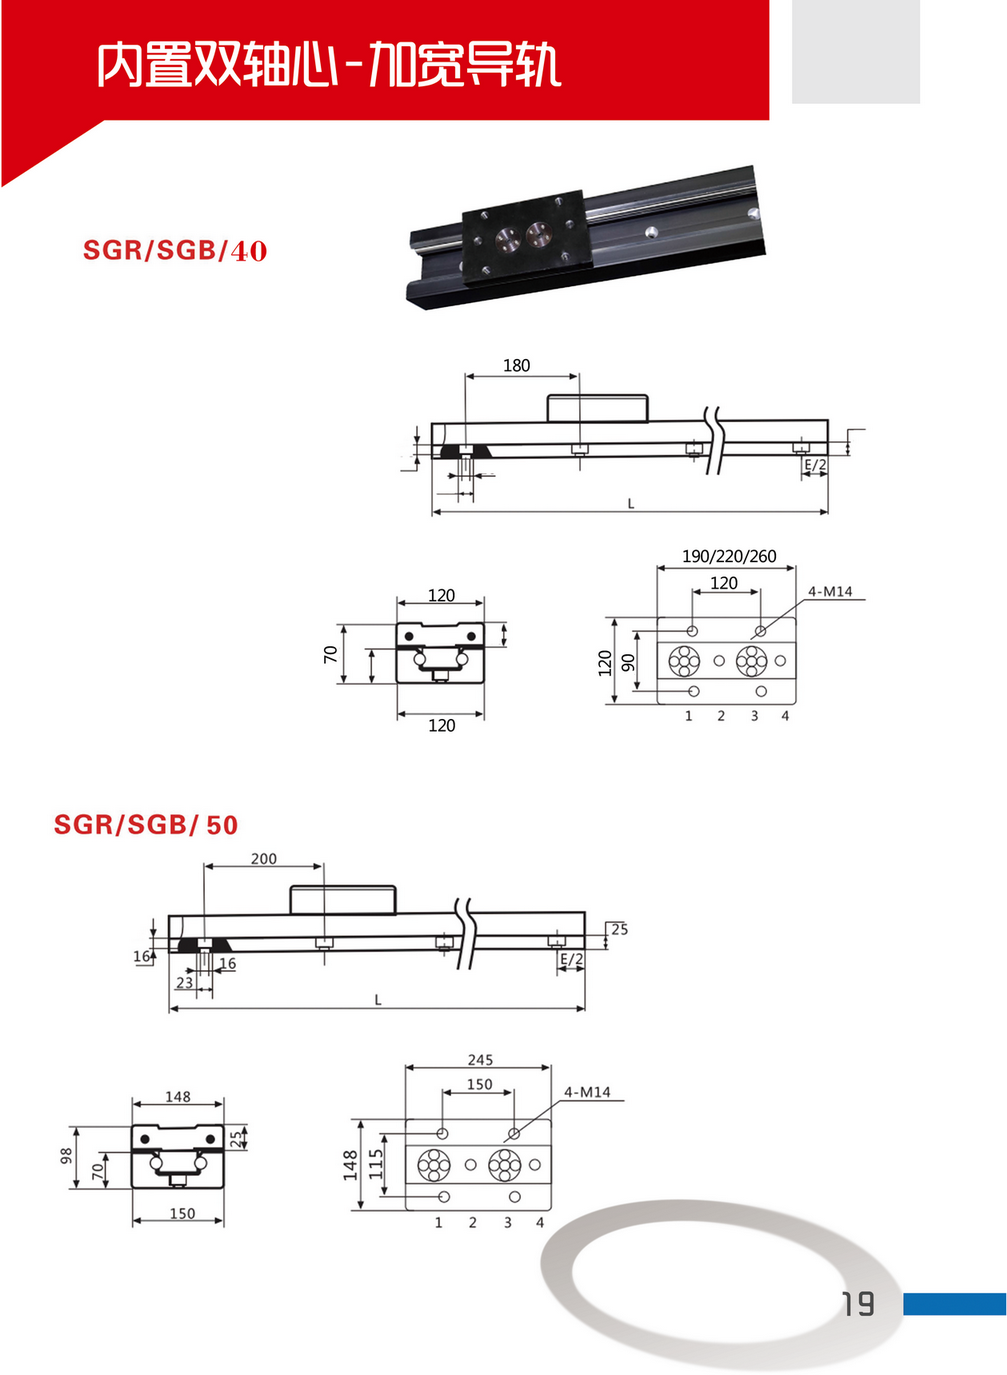 SGR/B 40/50详细尺寸